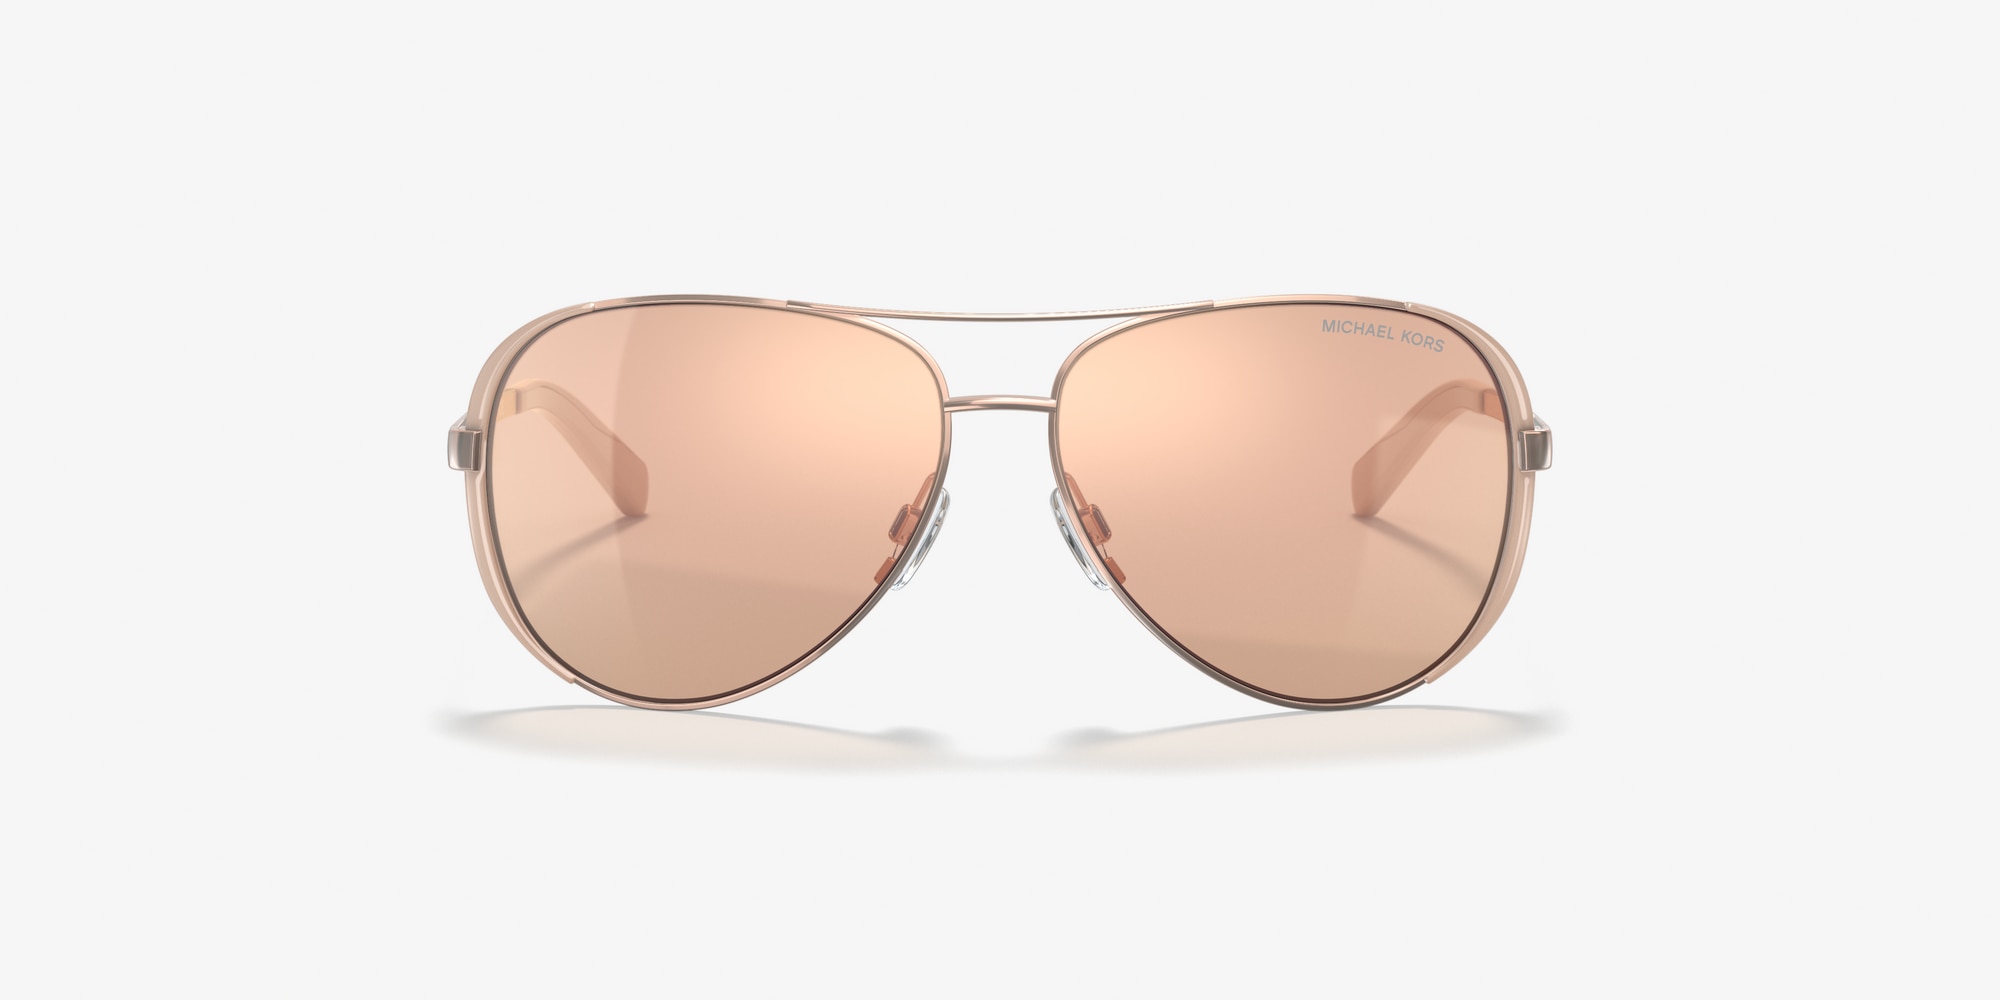 Michael Kors MK5004 CHELSEA Aviator 100325 59M Rose GoldToneBlue Mirror  Sunglasses For Women FREE Complimentary Eyewear Care Kit  Walmartcom